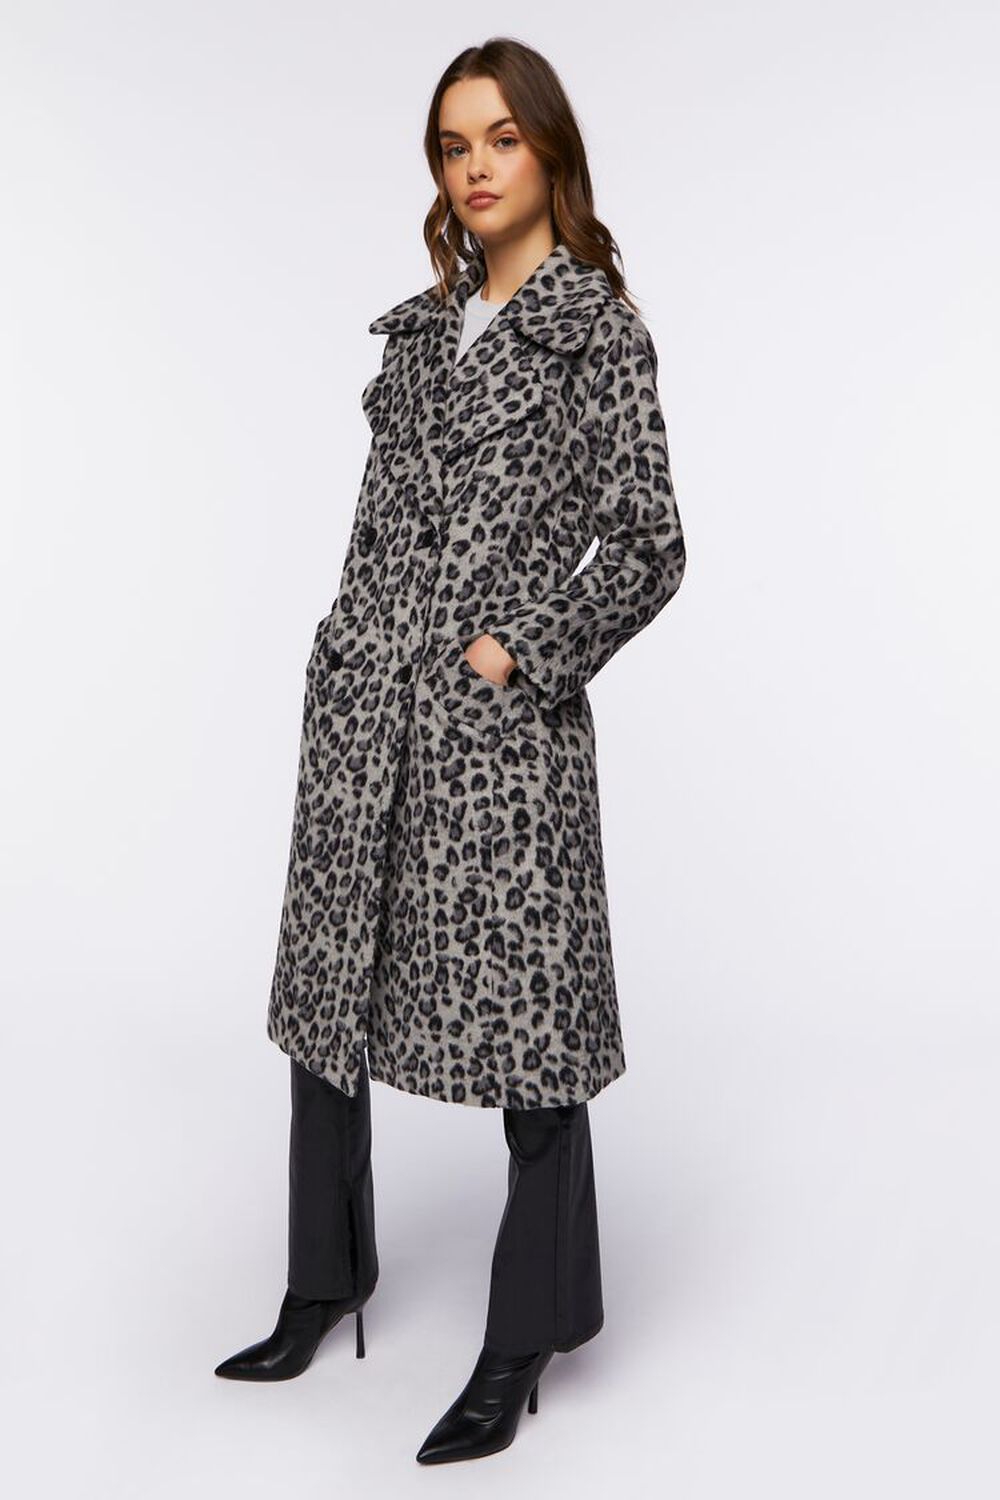 GREY/MULTI Leopard Print Duster Coat, image 2